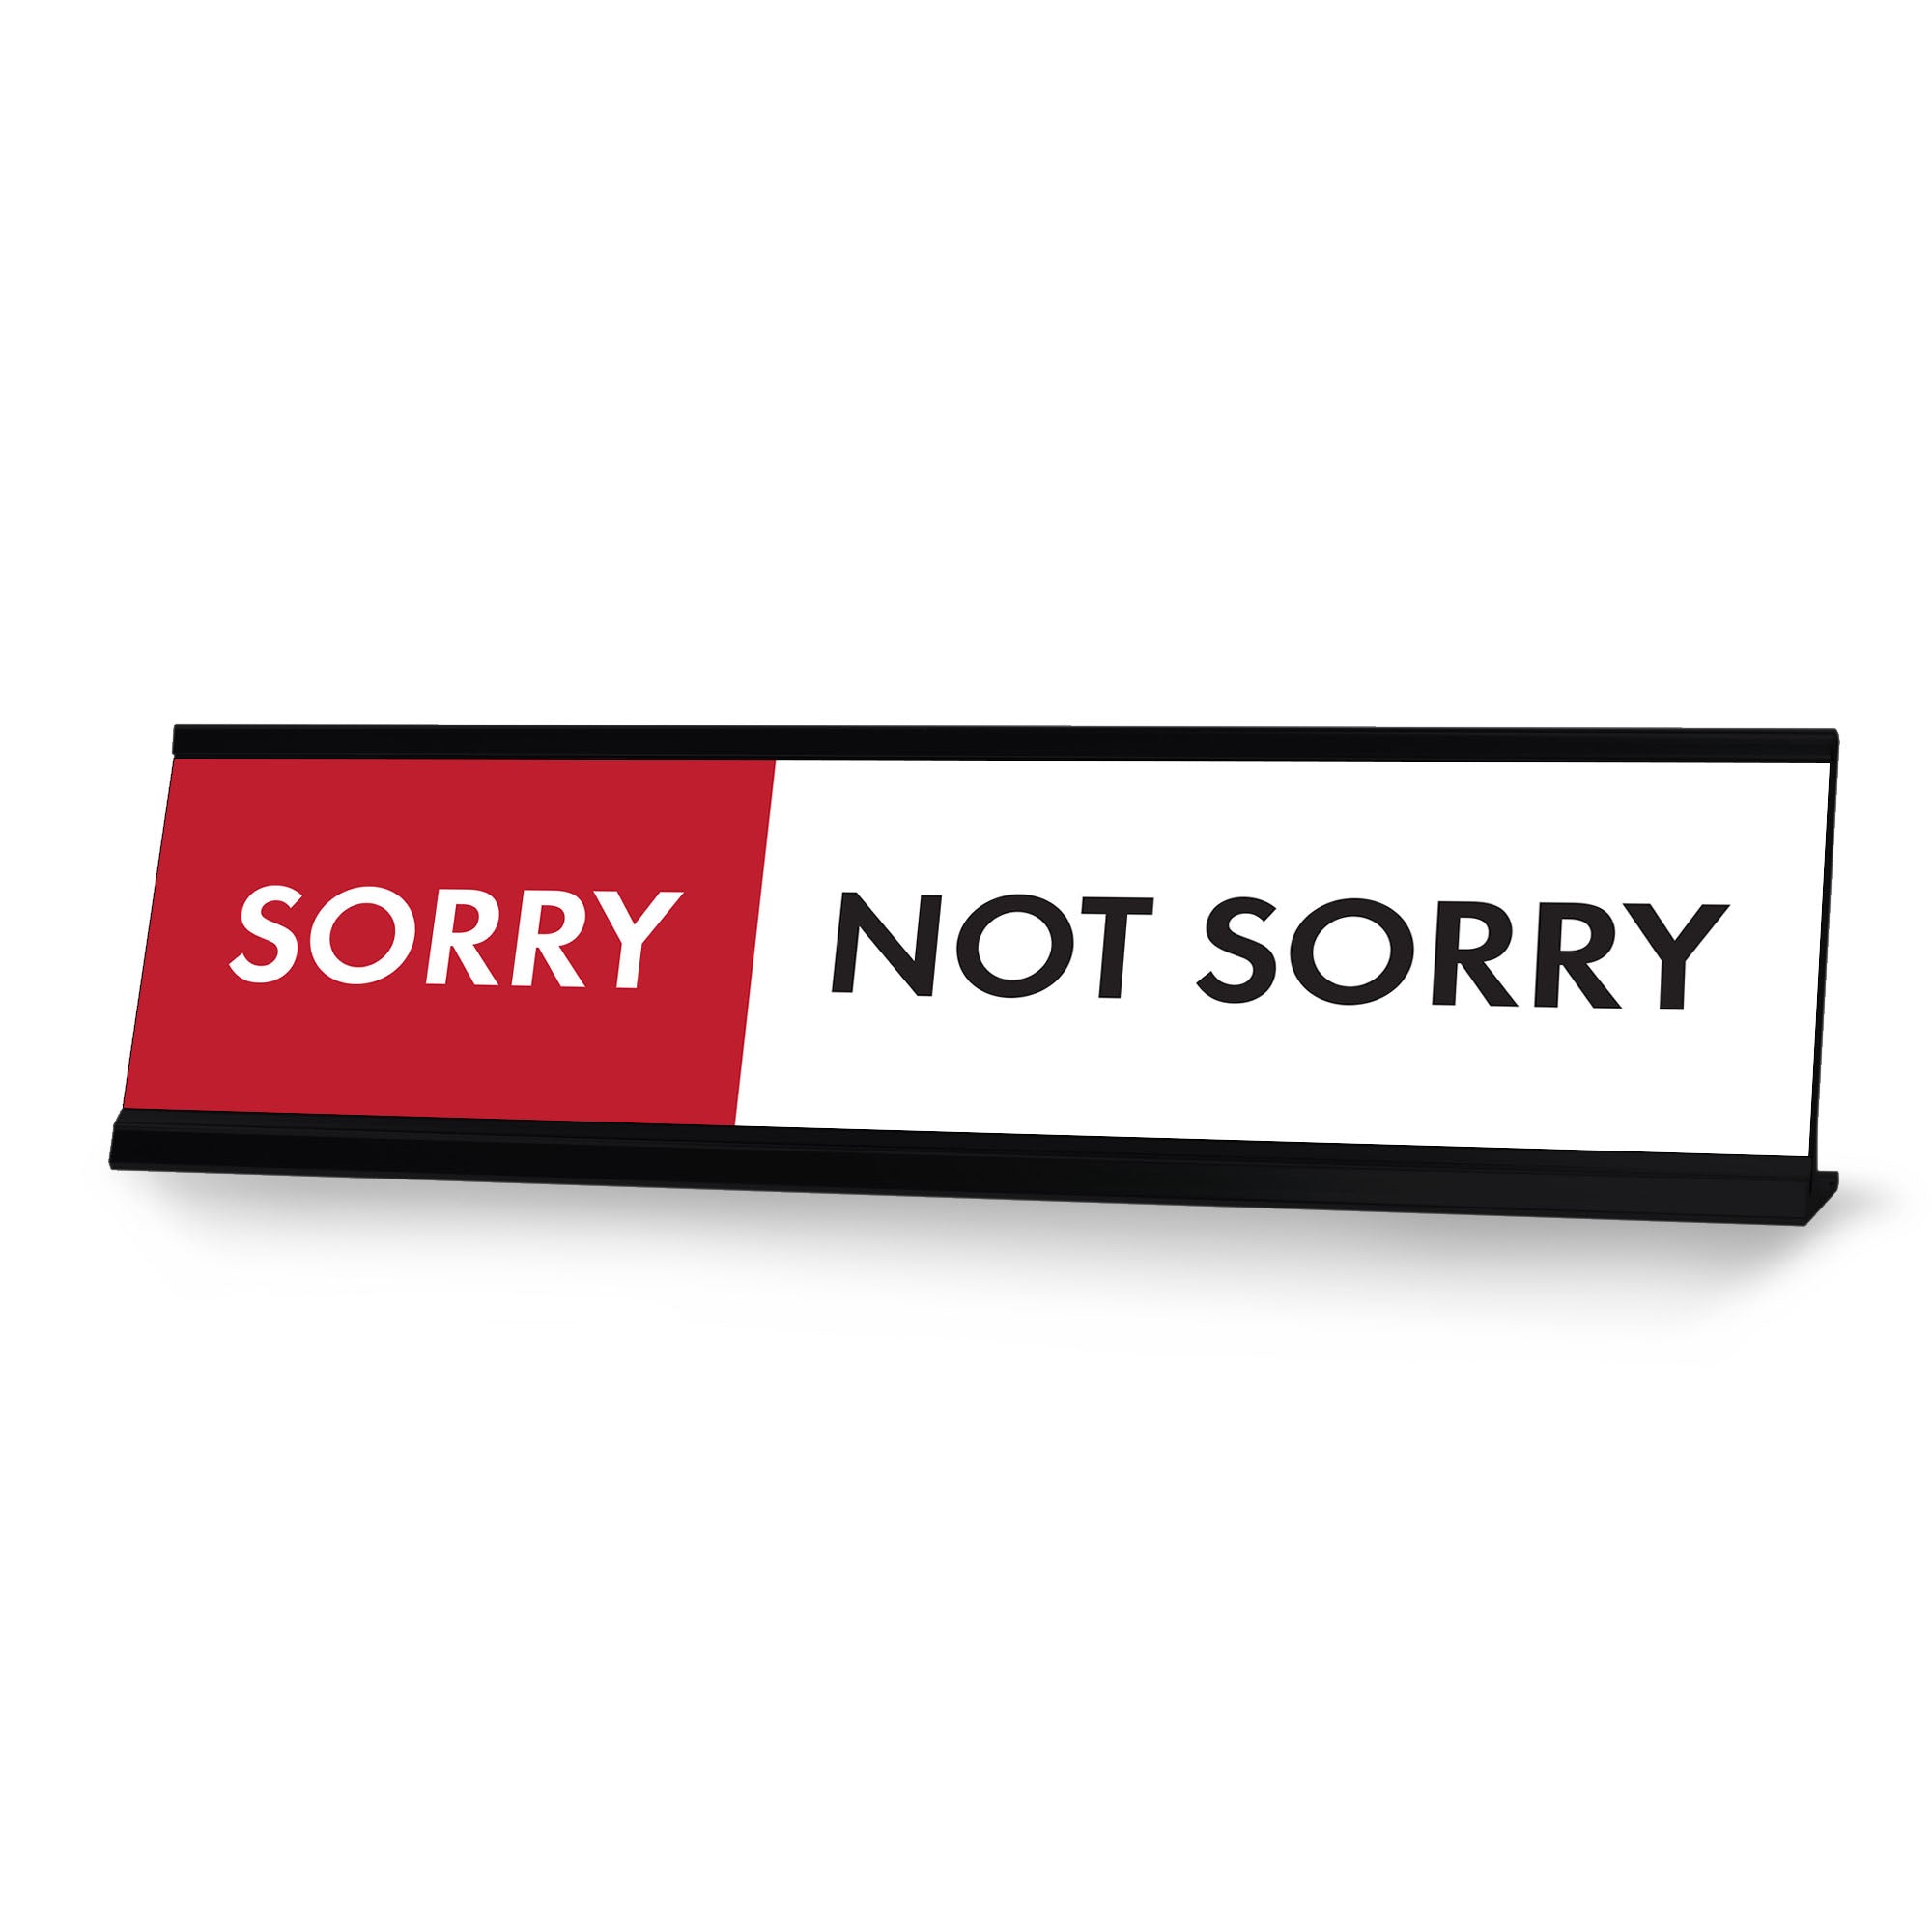 Sorry Not Sorry, Designer Series Desk Sign Novelty Nameplate (2 x 8")